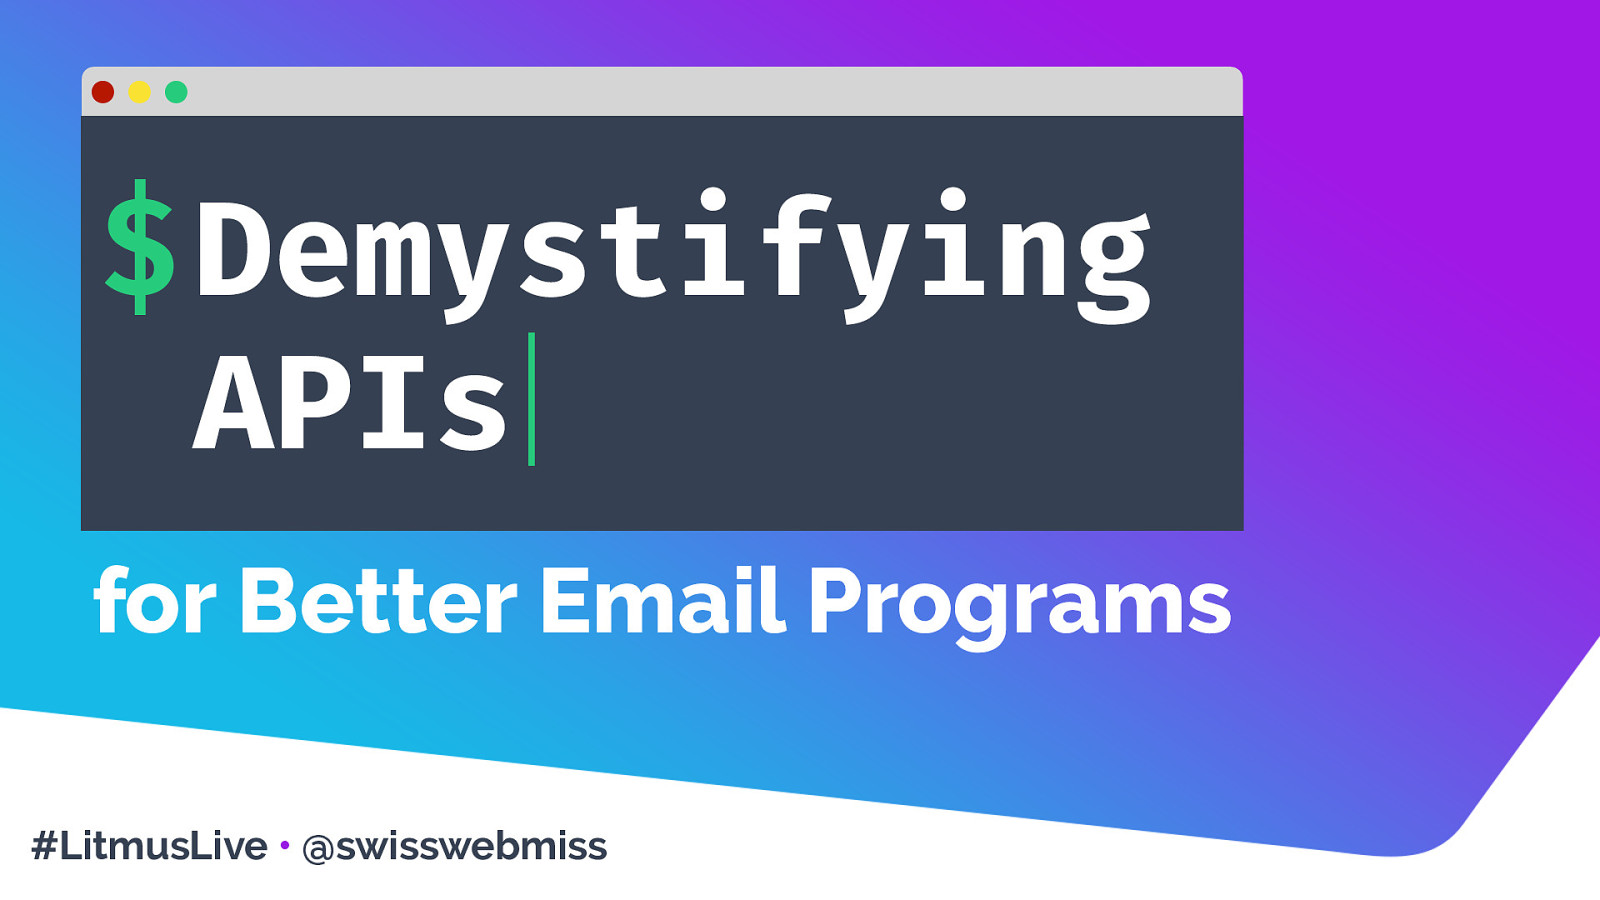 Demystifying APIs for Better Email Programs